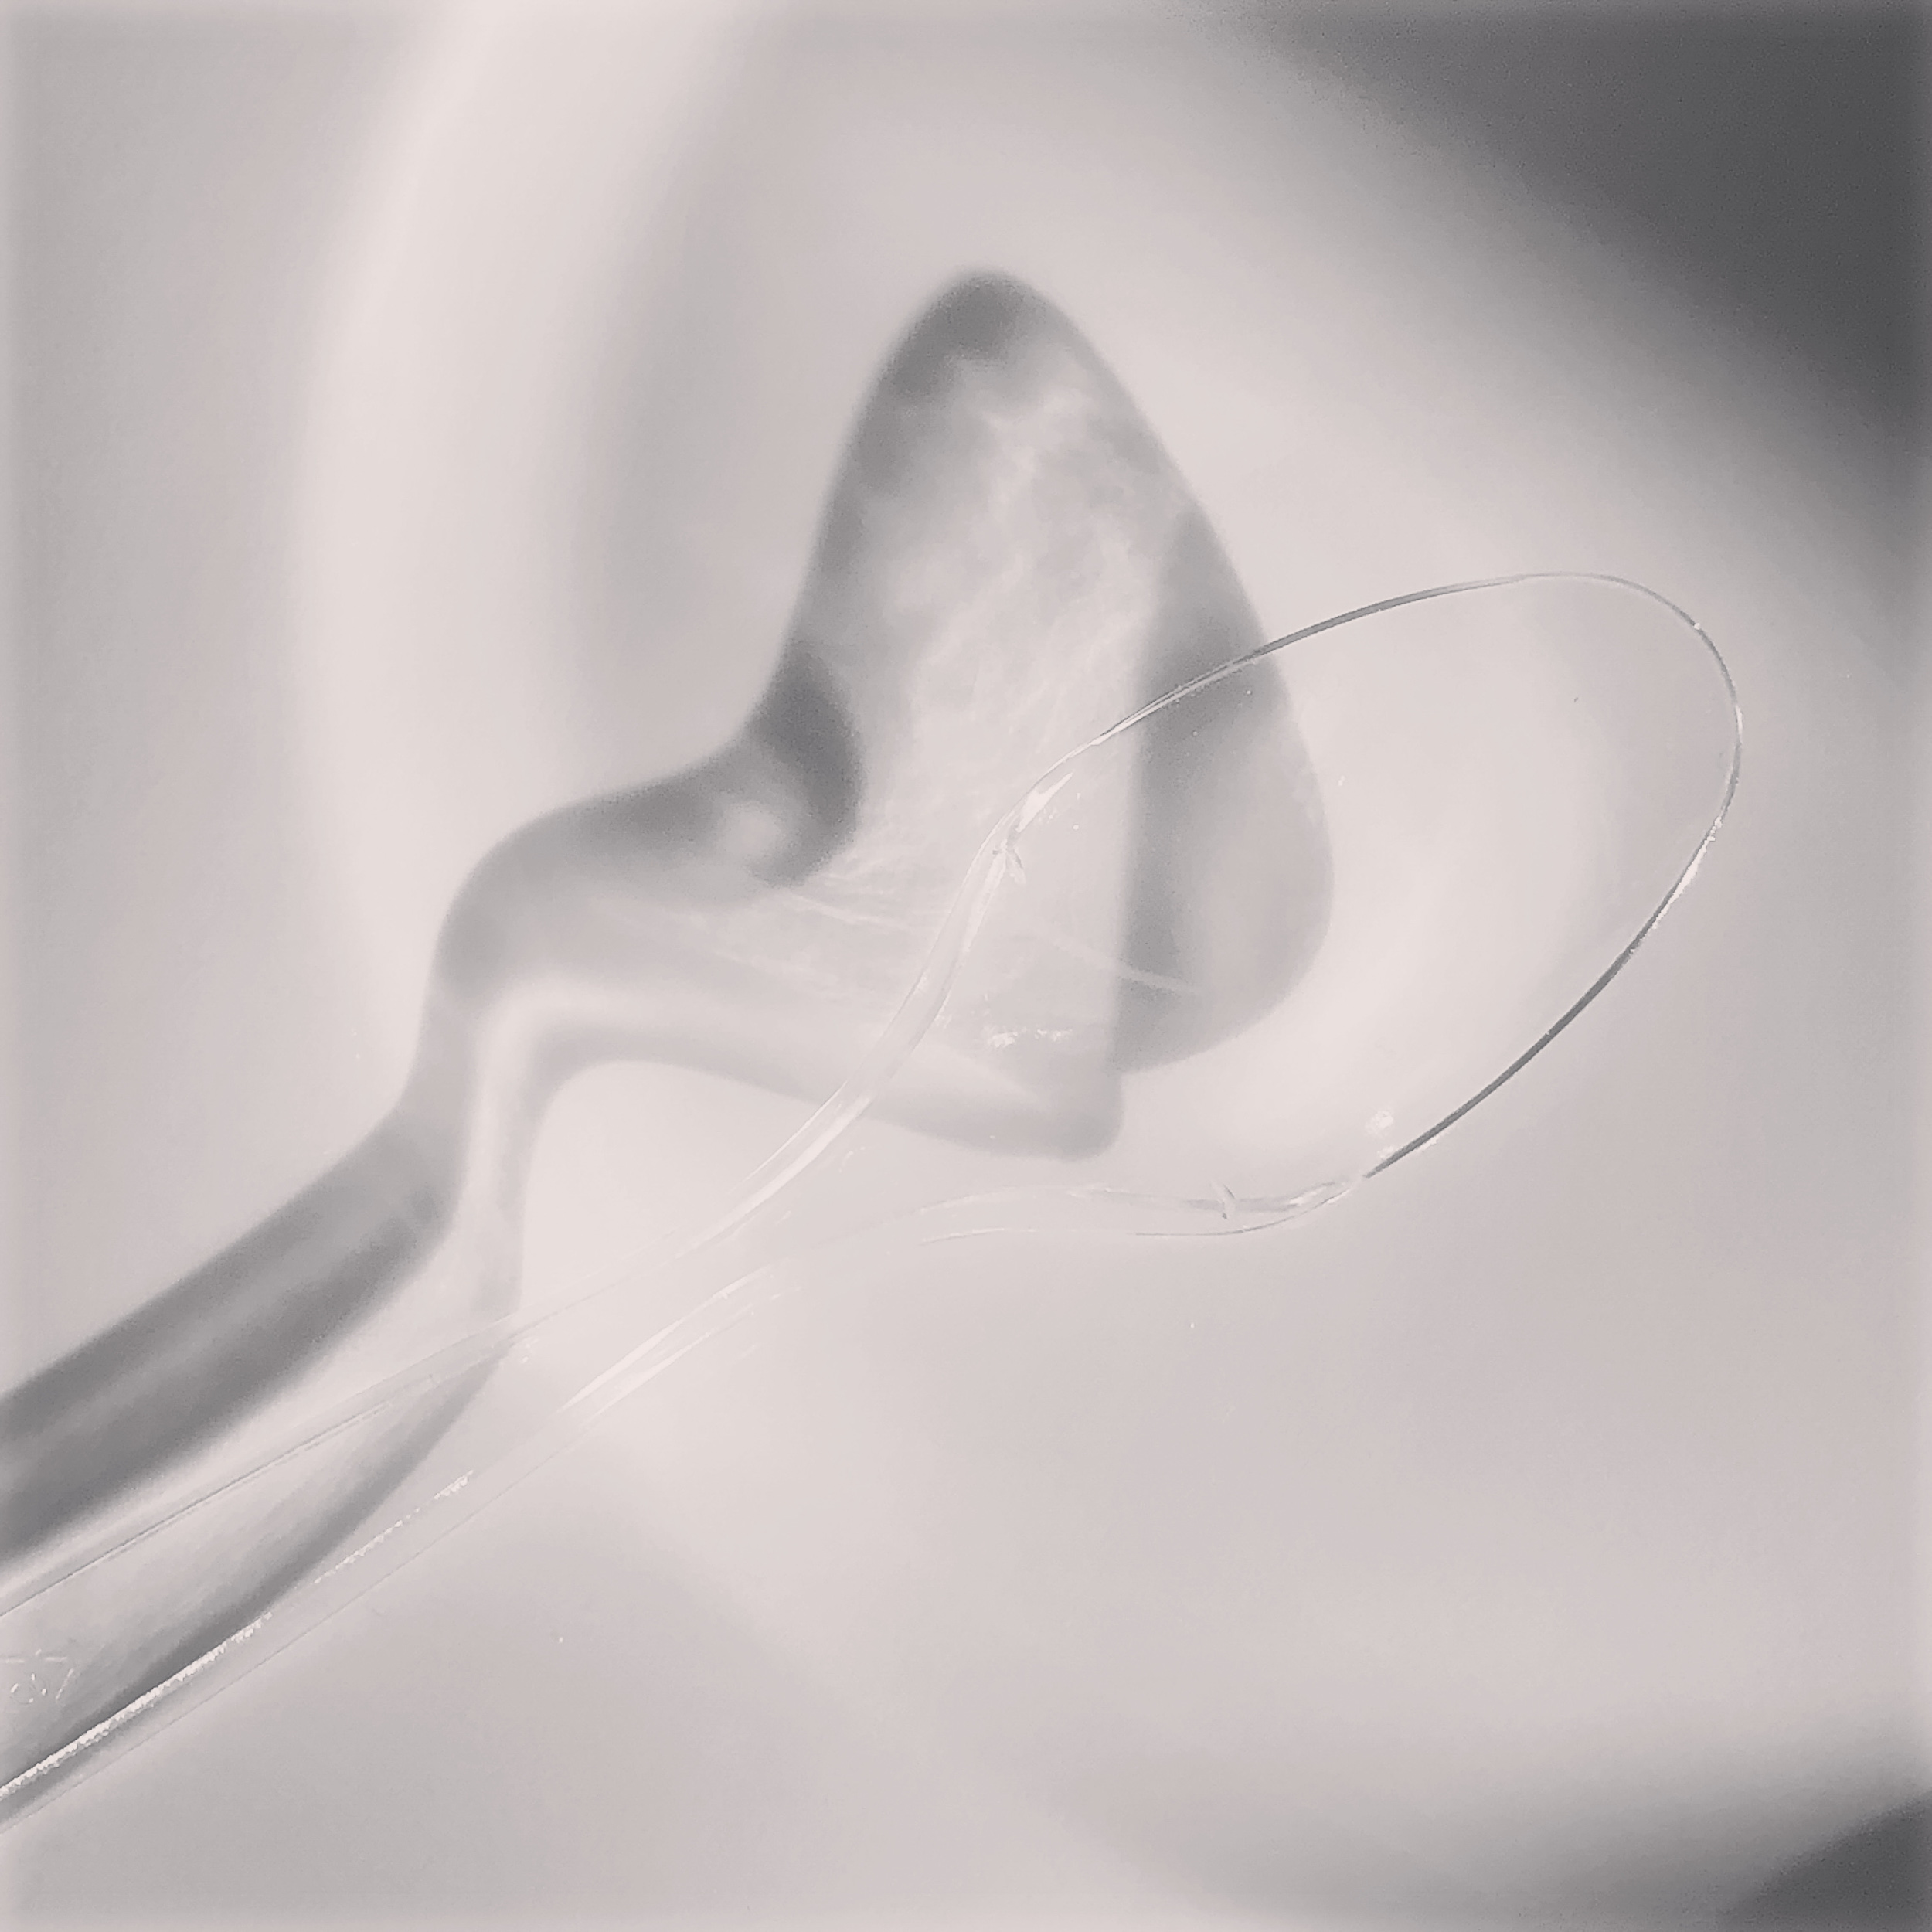 Dalí’s spoon